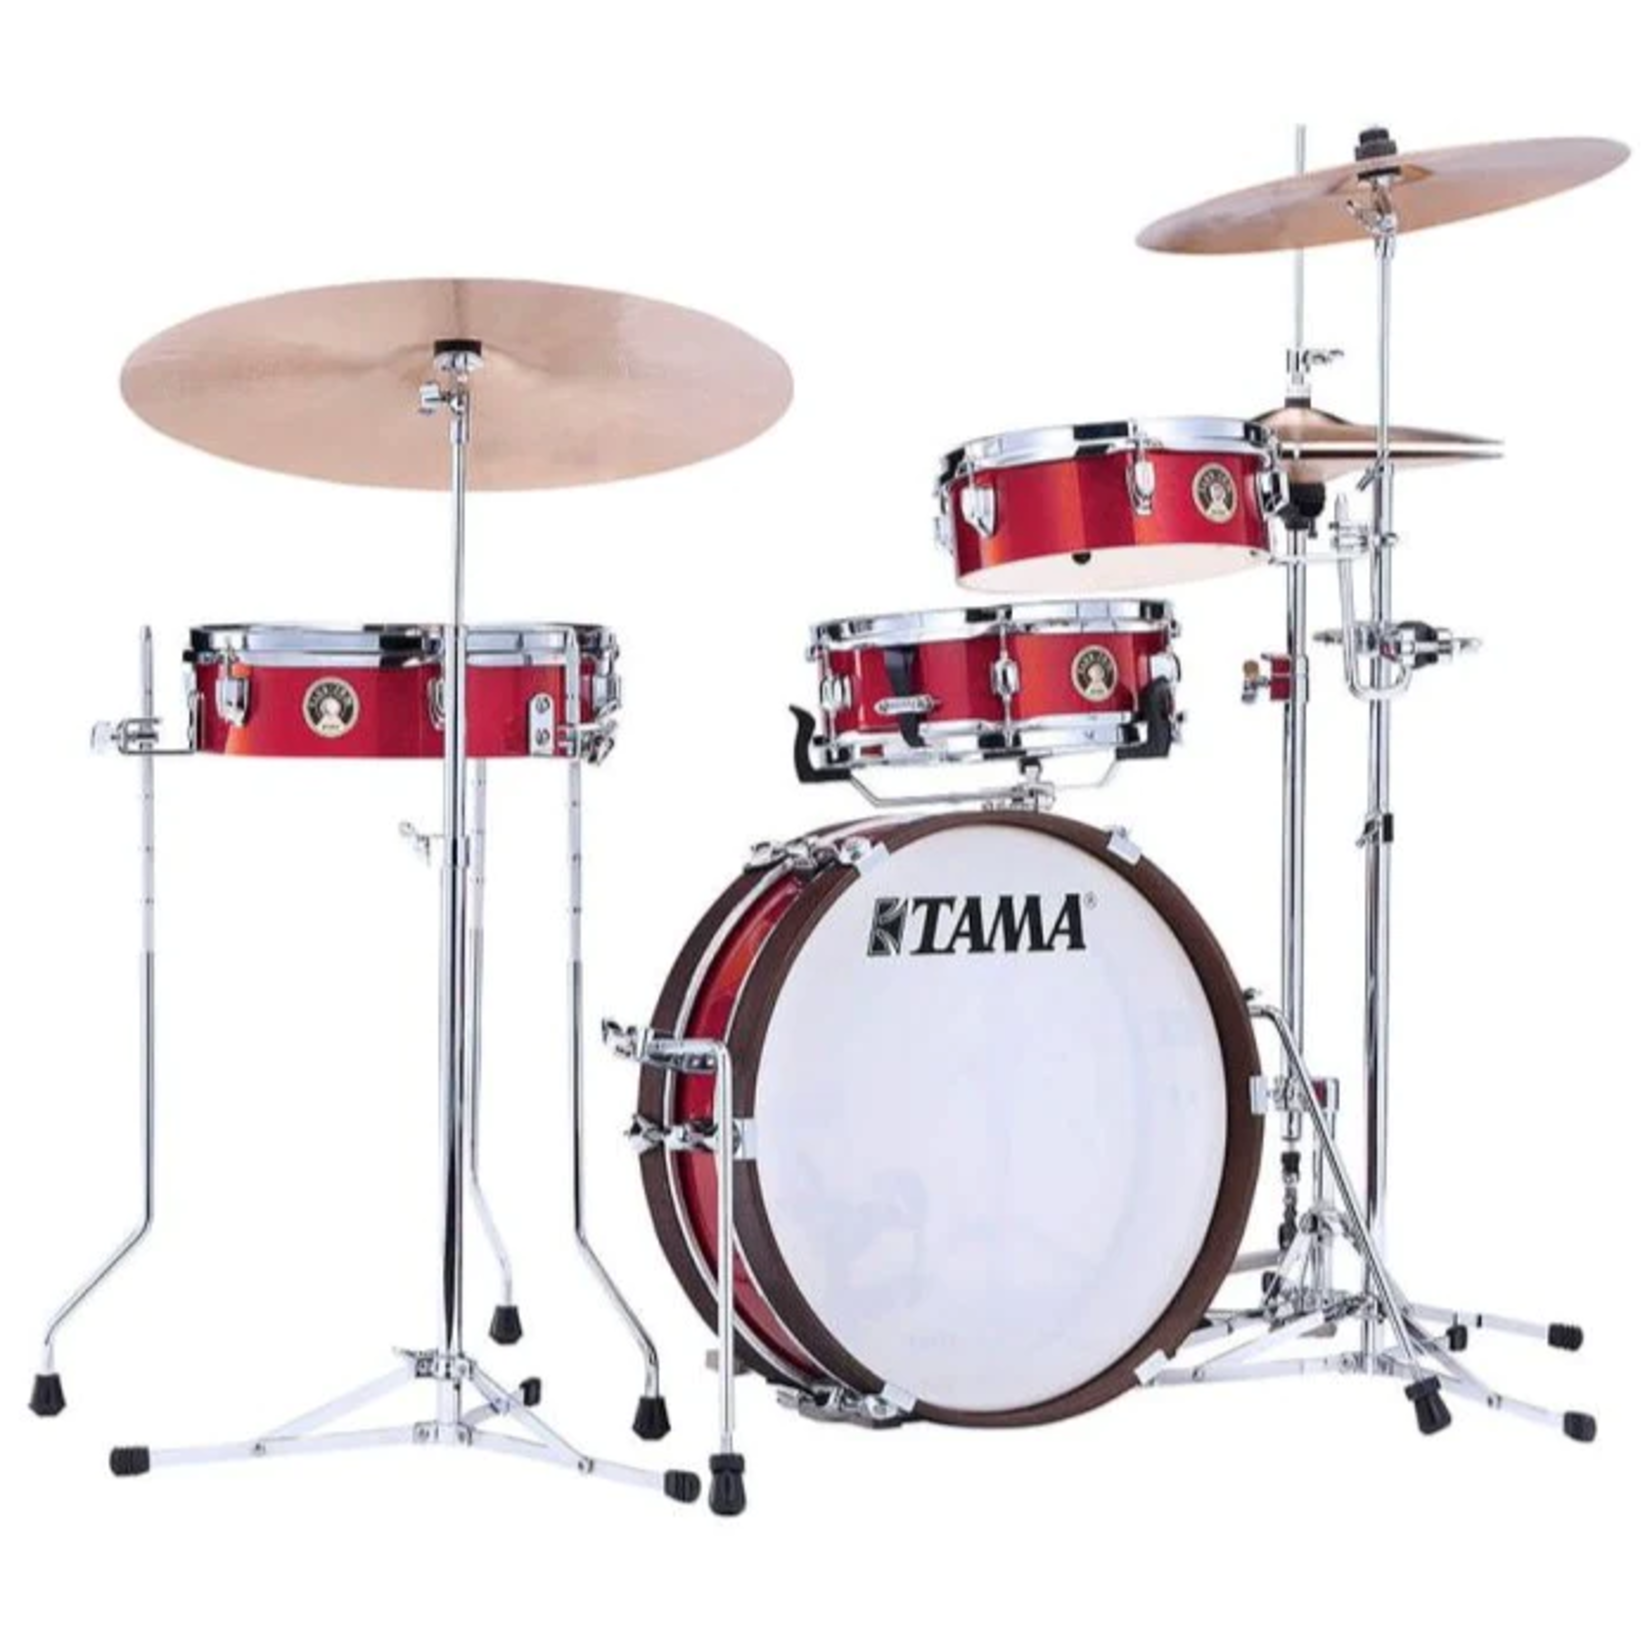 Tama Tama Club-Jam Pancake Shell Pack (Burnt Red Mist) 18", 10", 12", 13" LJK48PBRM